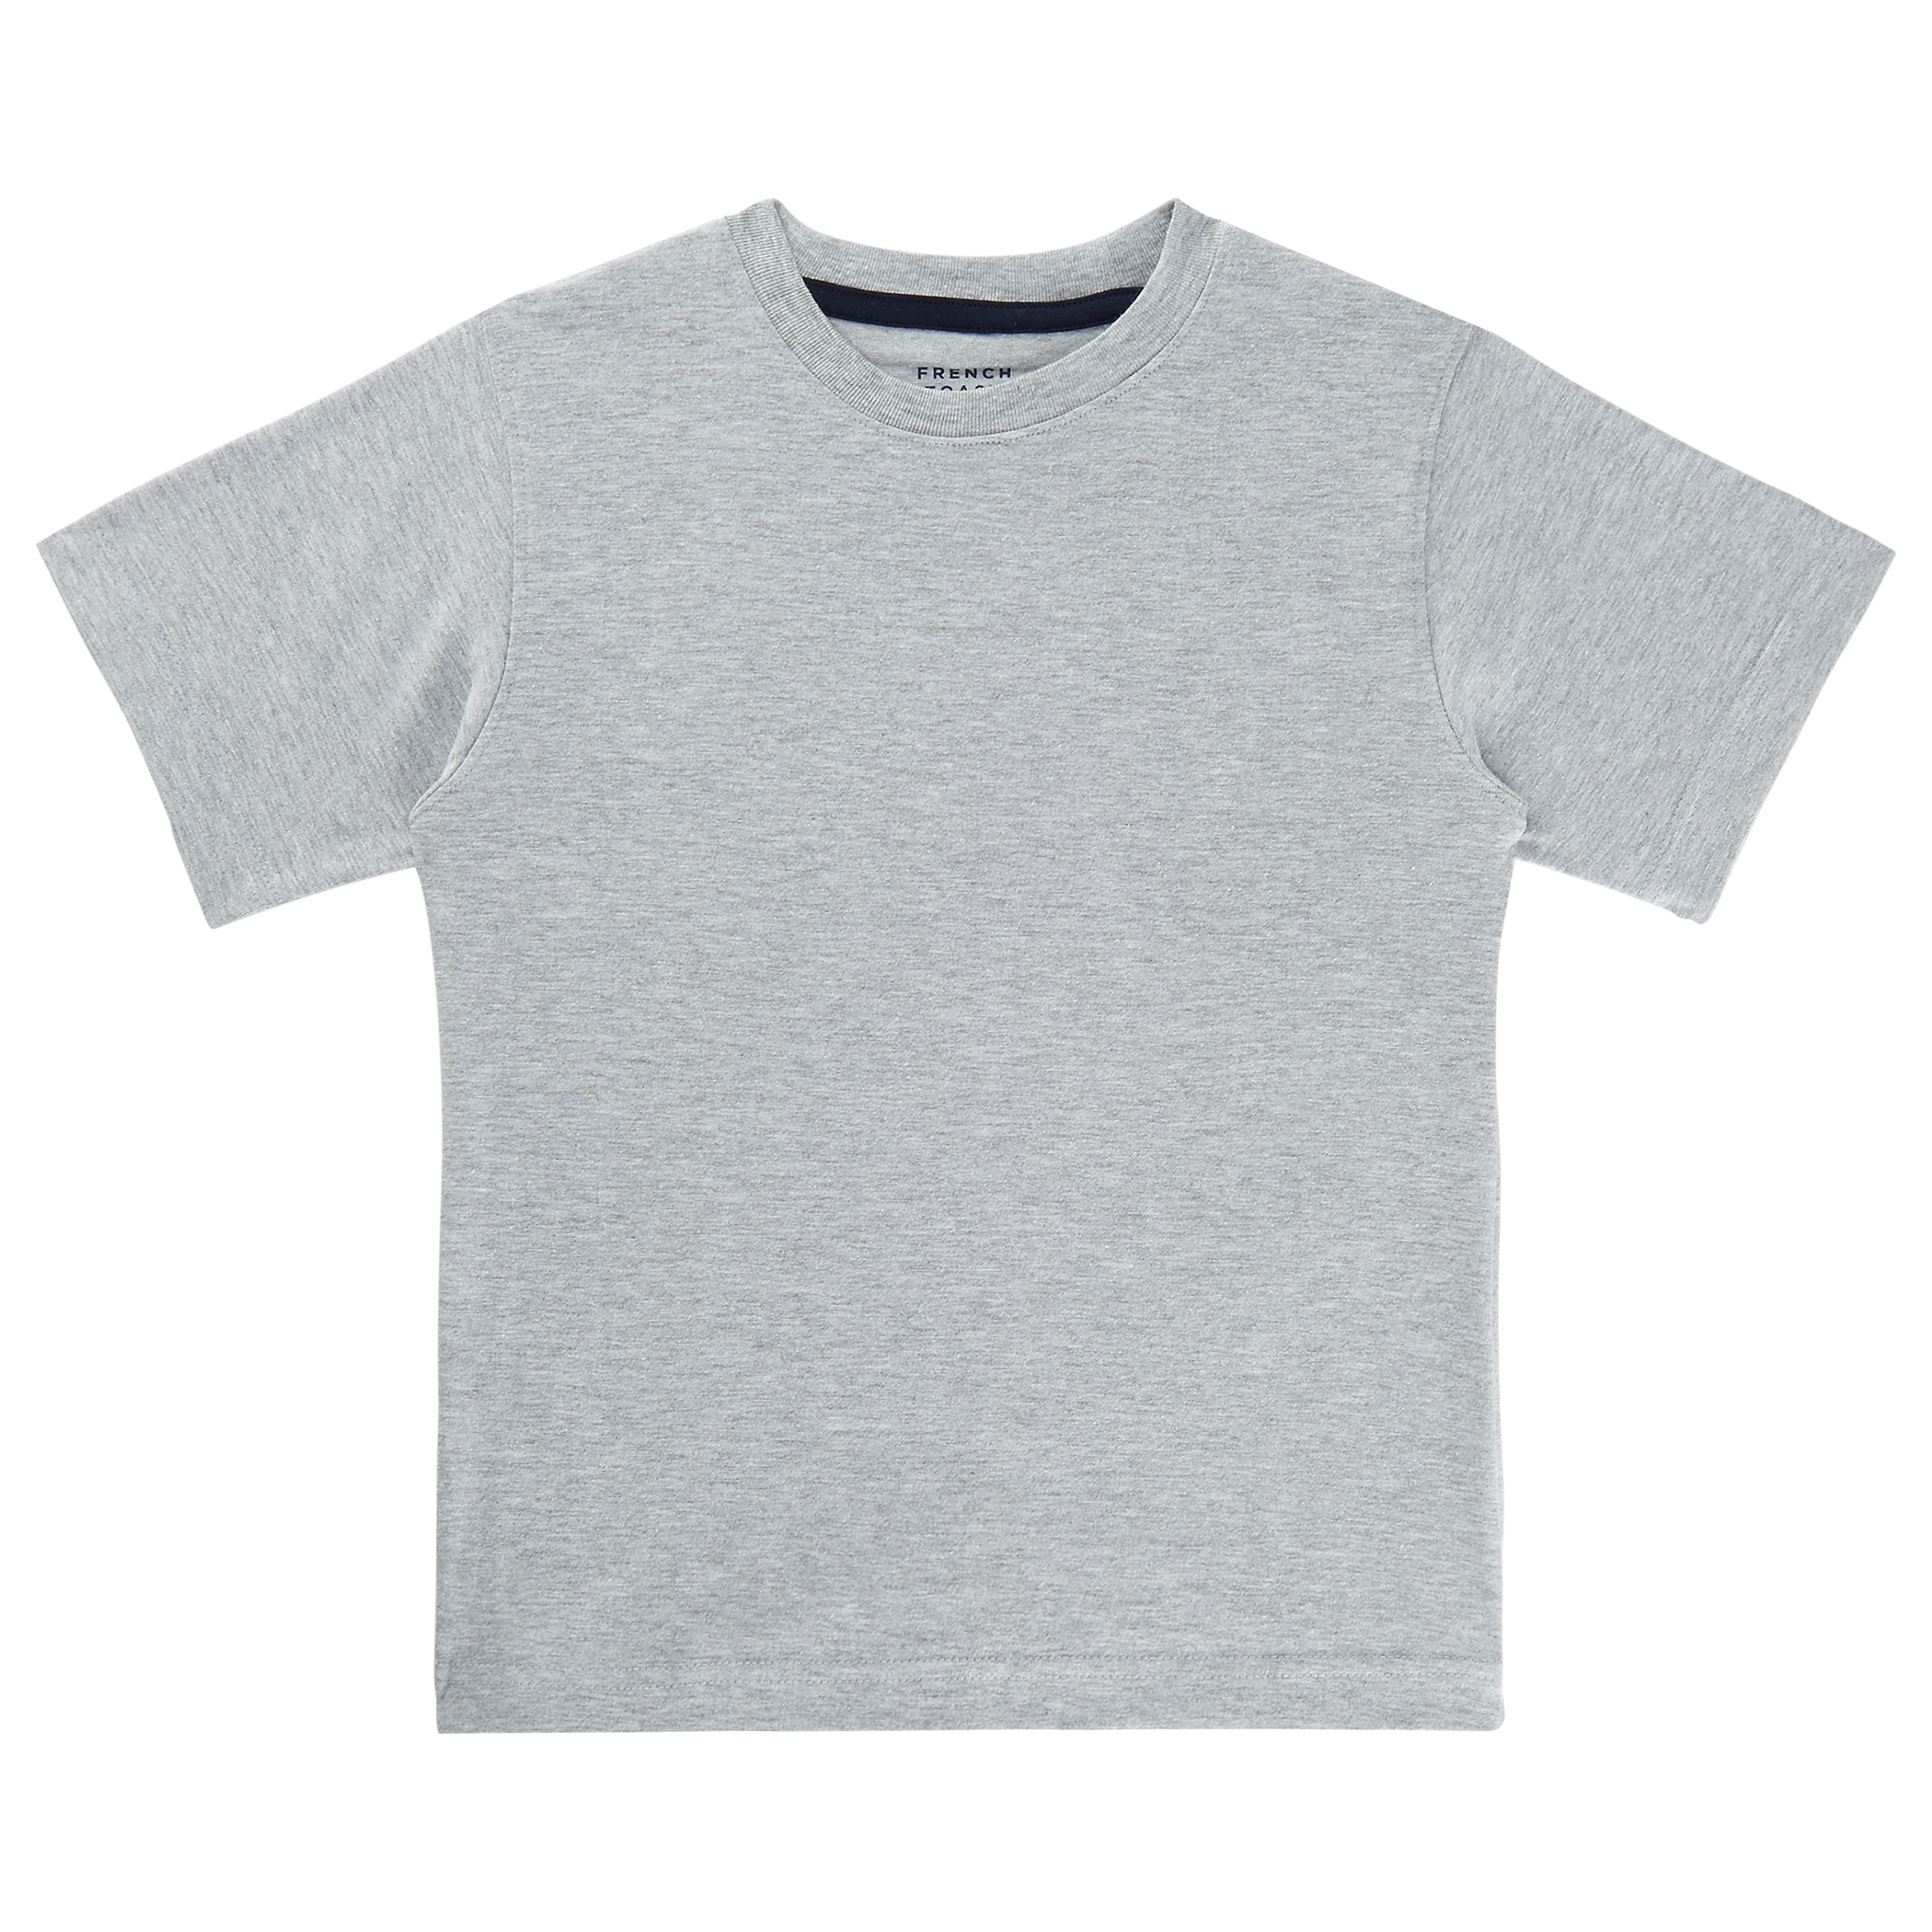 Liberty Prep School Grey T-Shirtis perfect for gym day.